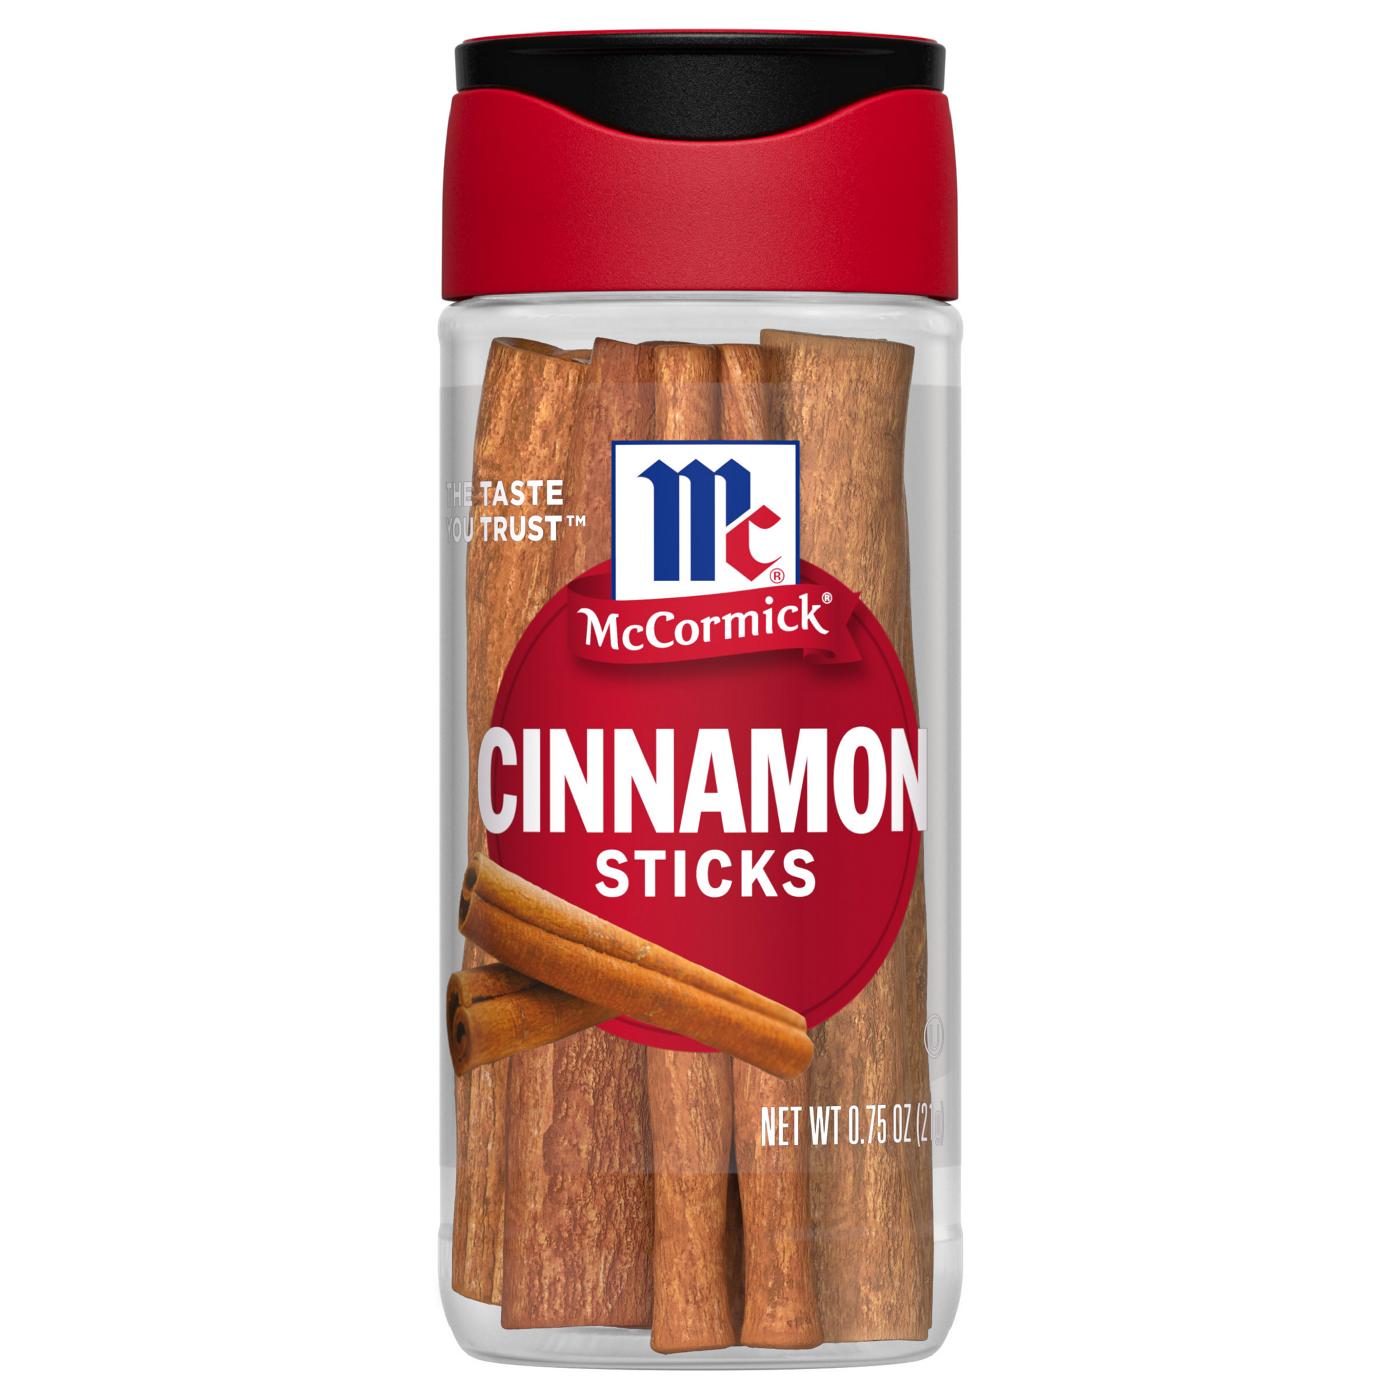 McCormick Cinnamon Sticks; image 1 of 8